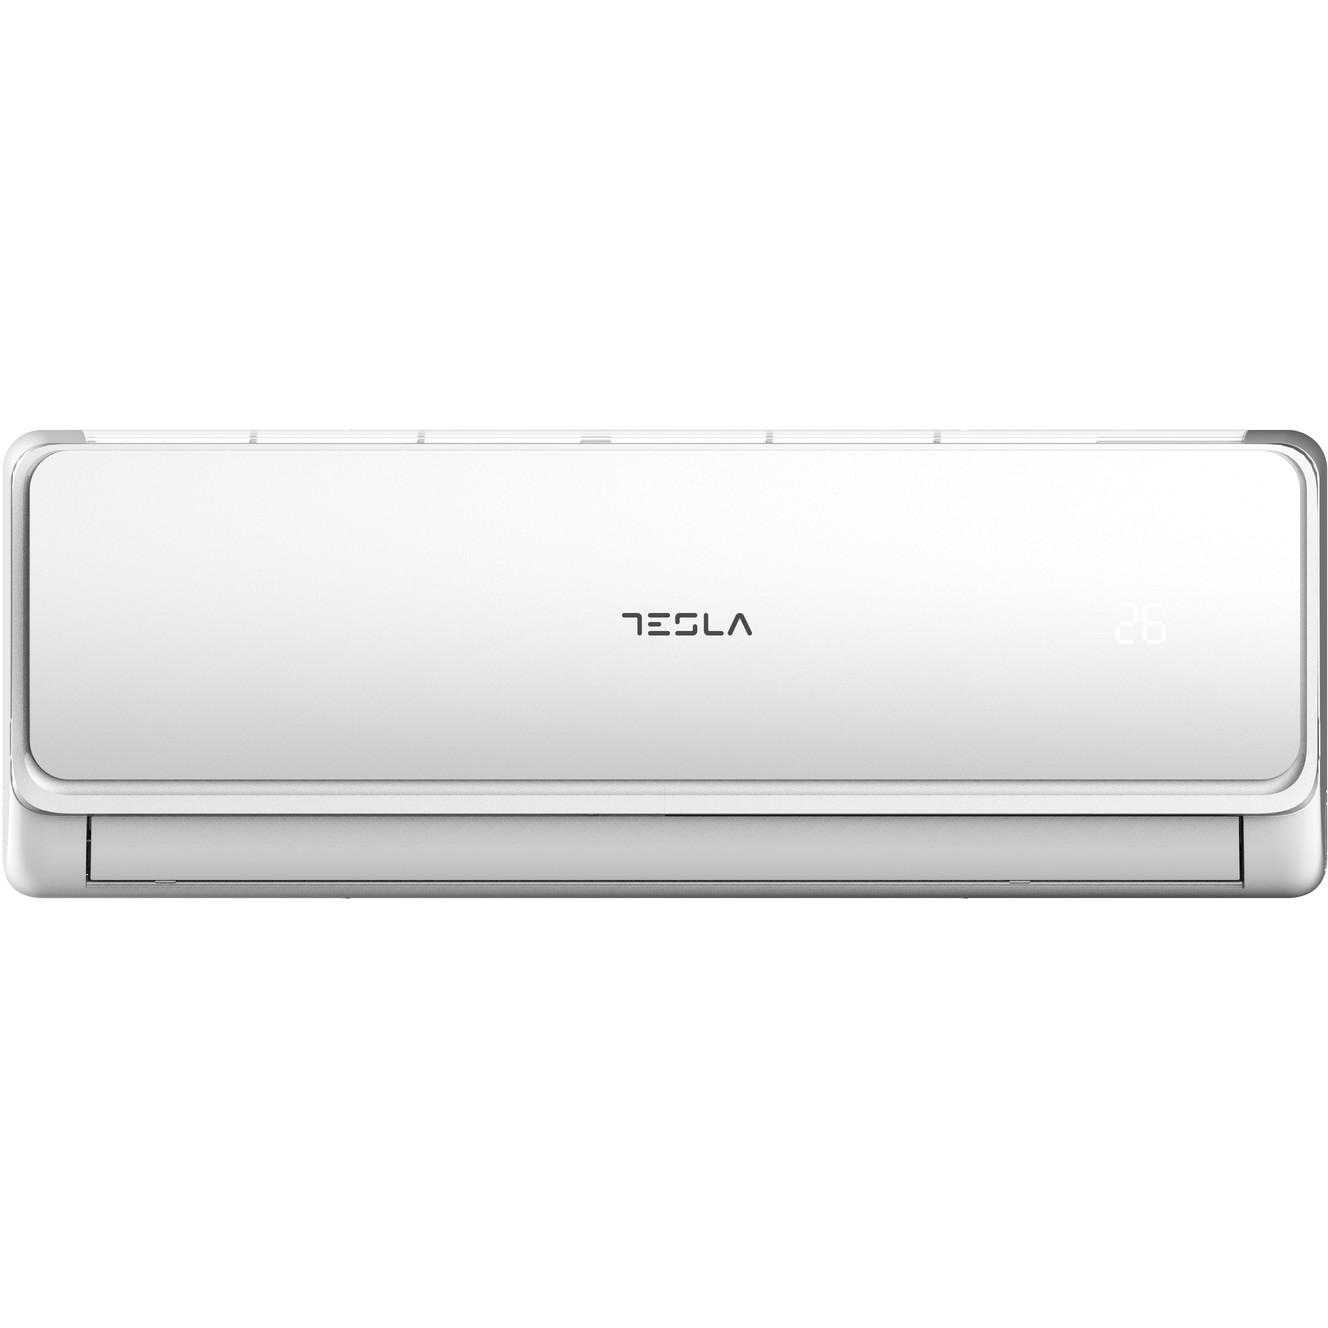  Aparat de aer conditionat Tesla TA53FFLL-1832IAW, 18000 BTU, Inverter, Wi-Fi, Clasa A++ 